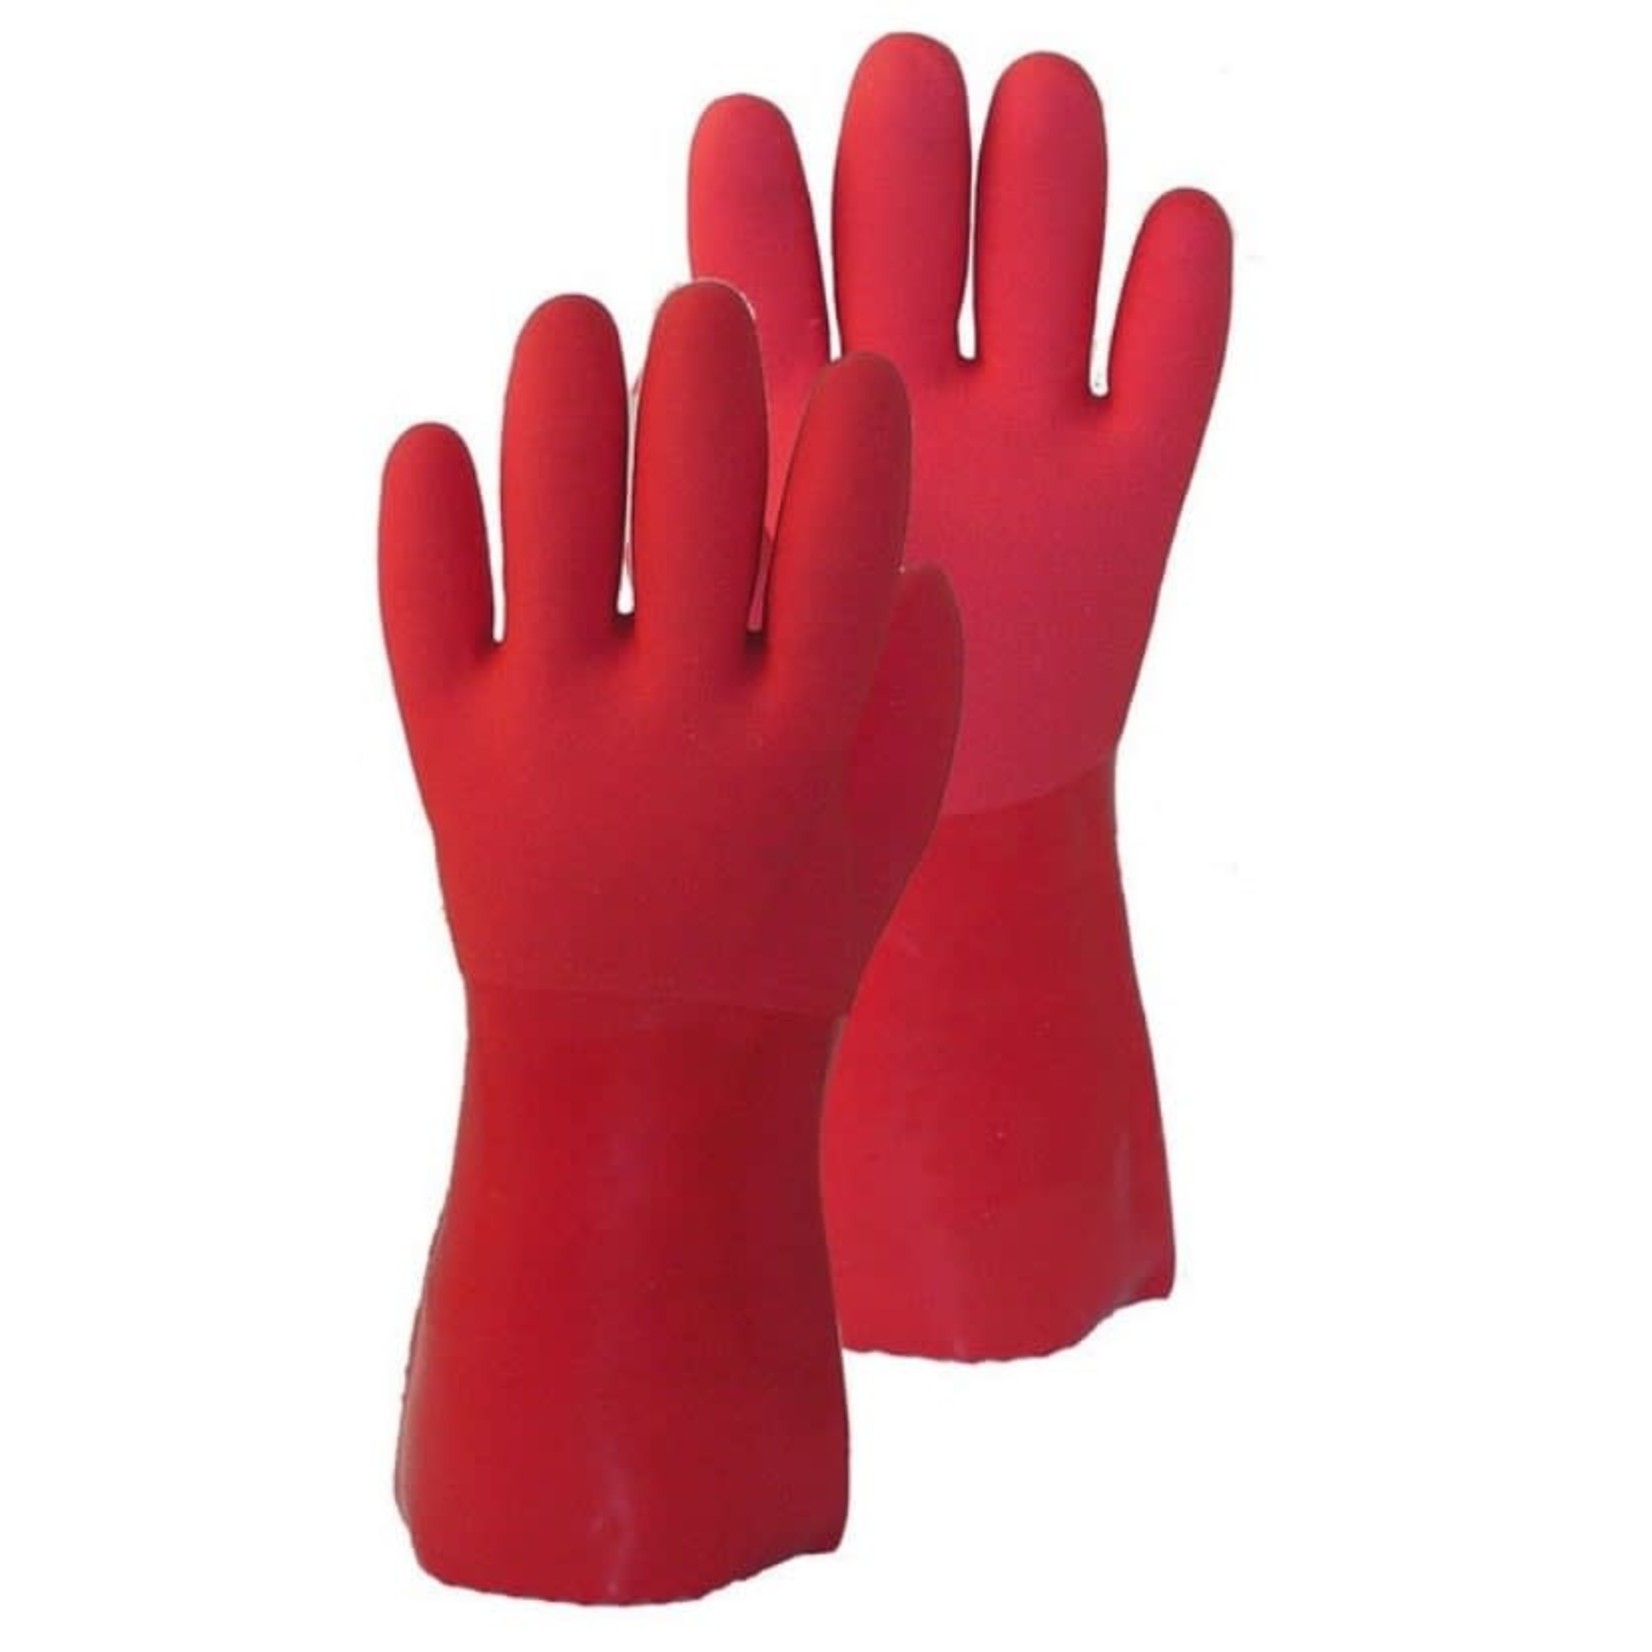 https://cdn.shoplightspeed.com/shops/635701/files/29941469/1652x1652x2/true-blues-true-blue-gloves-small-red-dnr.jpg